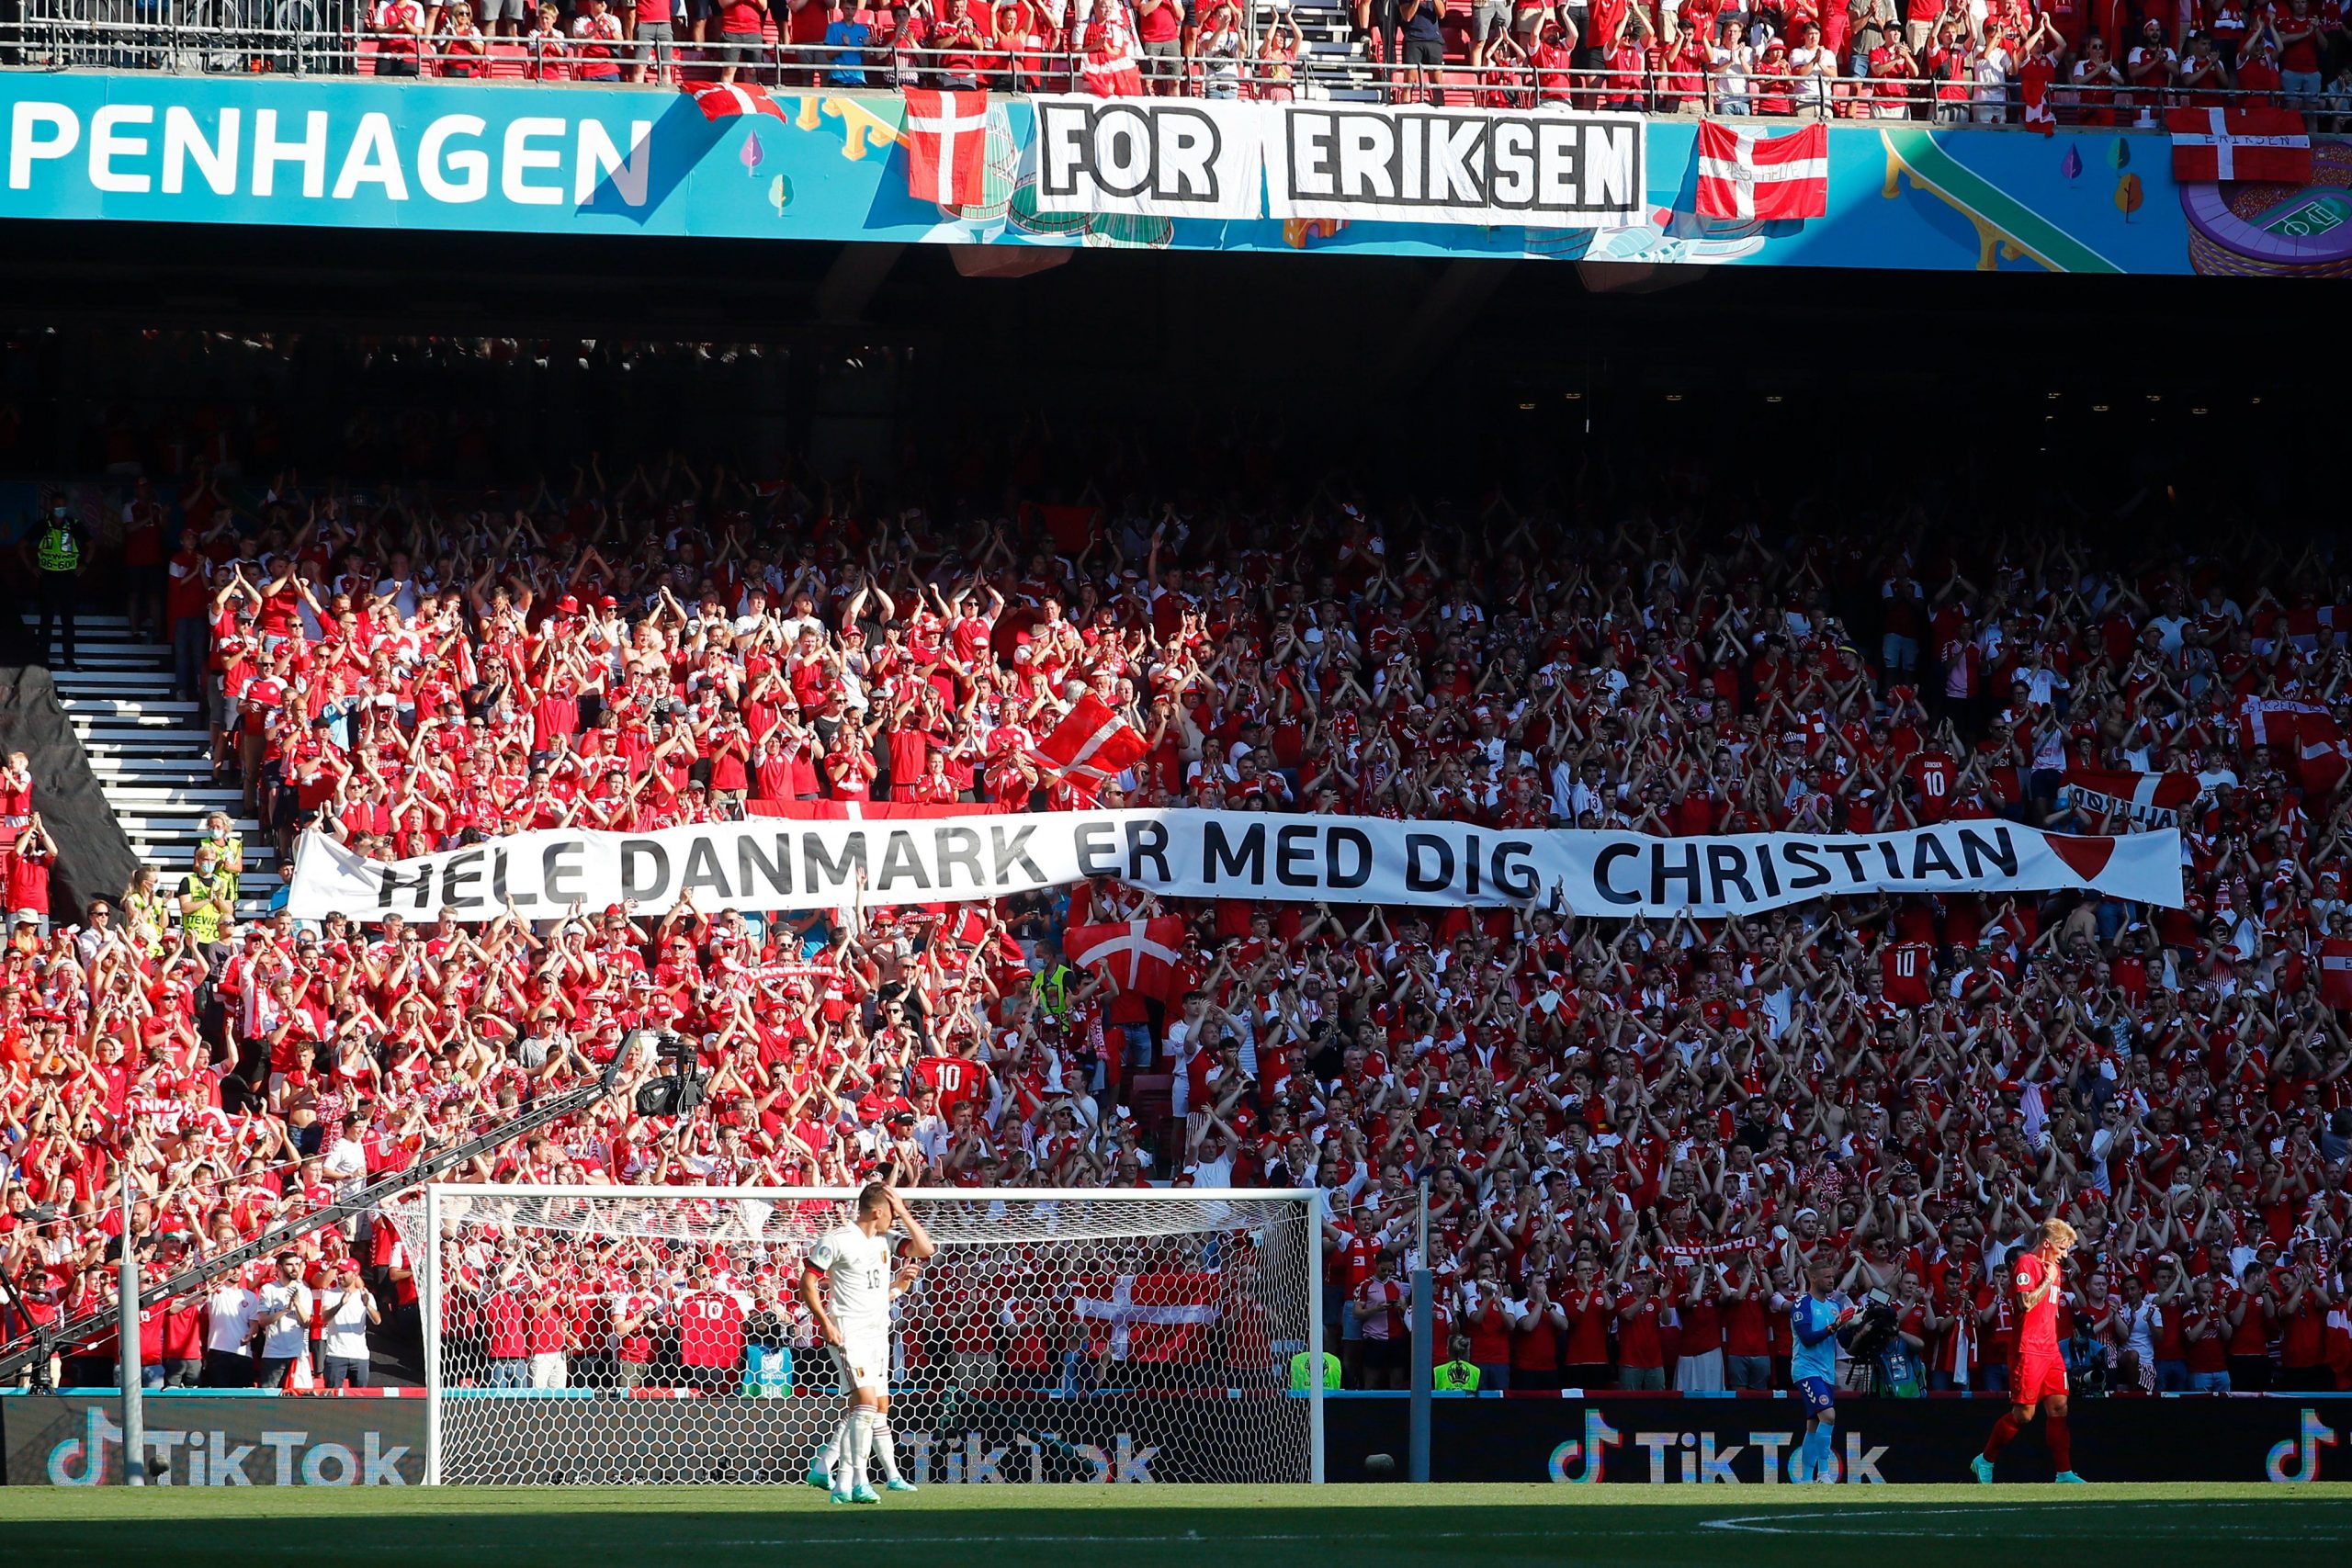 Denmark and Belgium halt Euro 2020 game to applaud Christian Eriksen